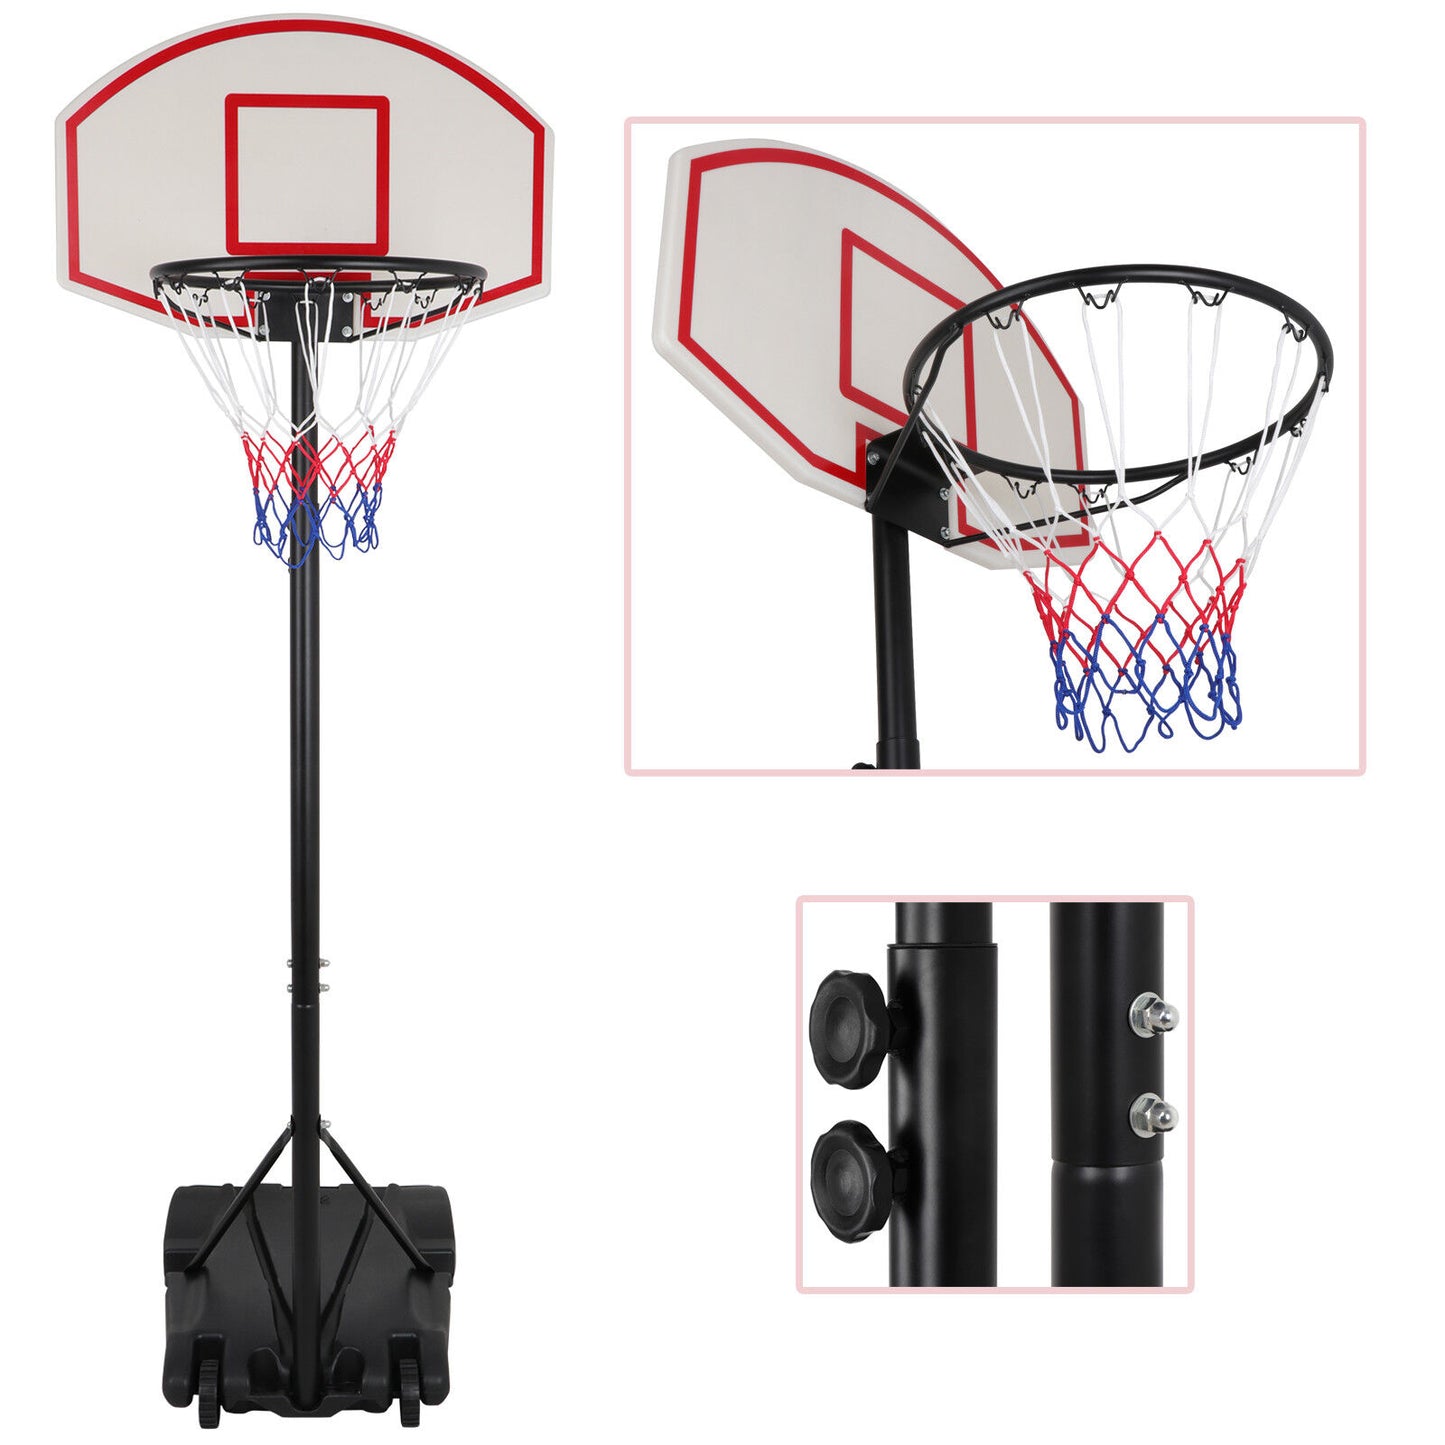 Portable Adjustable Basketball System Hoop Backboard Yard Outdoor Kids Sports